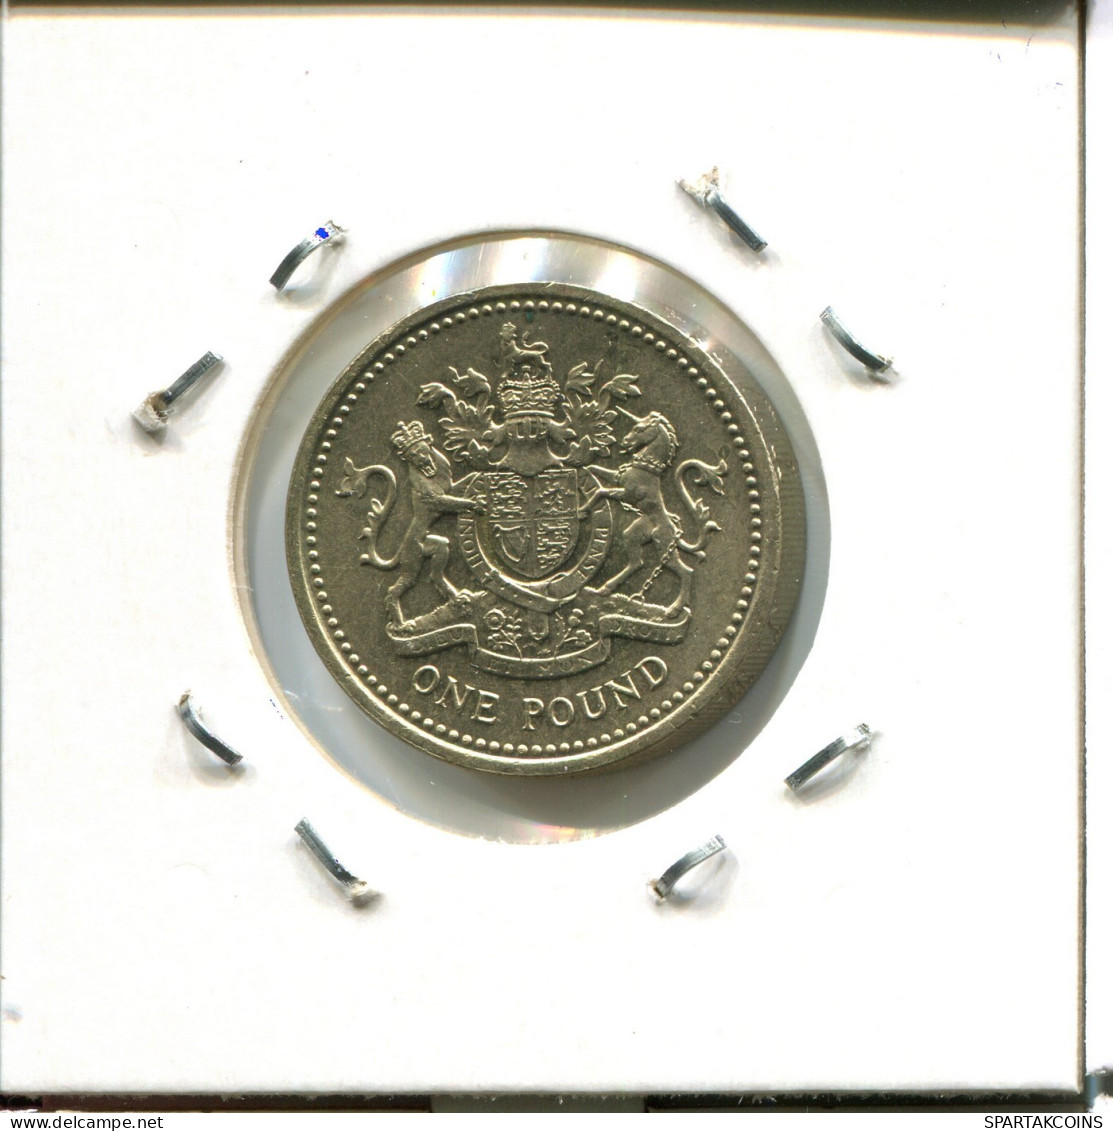 POUND 1983 UK GBAN BRETAÑA GREAT BRITAIN Moneda #AW984.E.A - 1 Pond